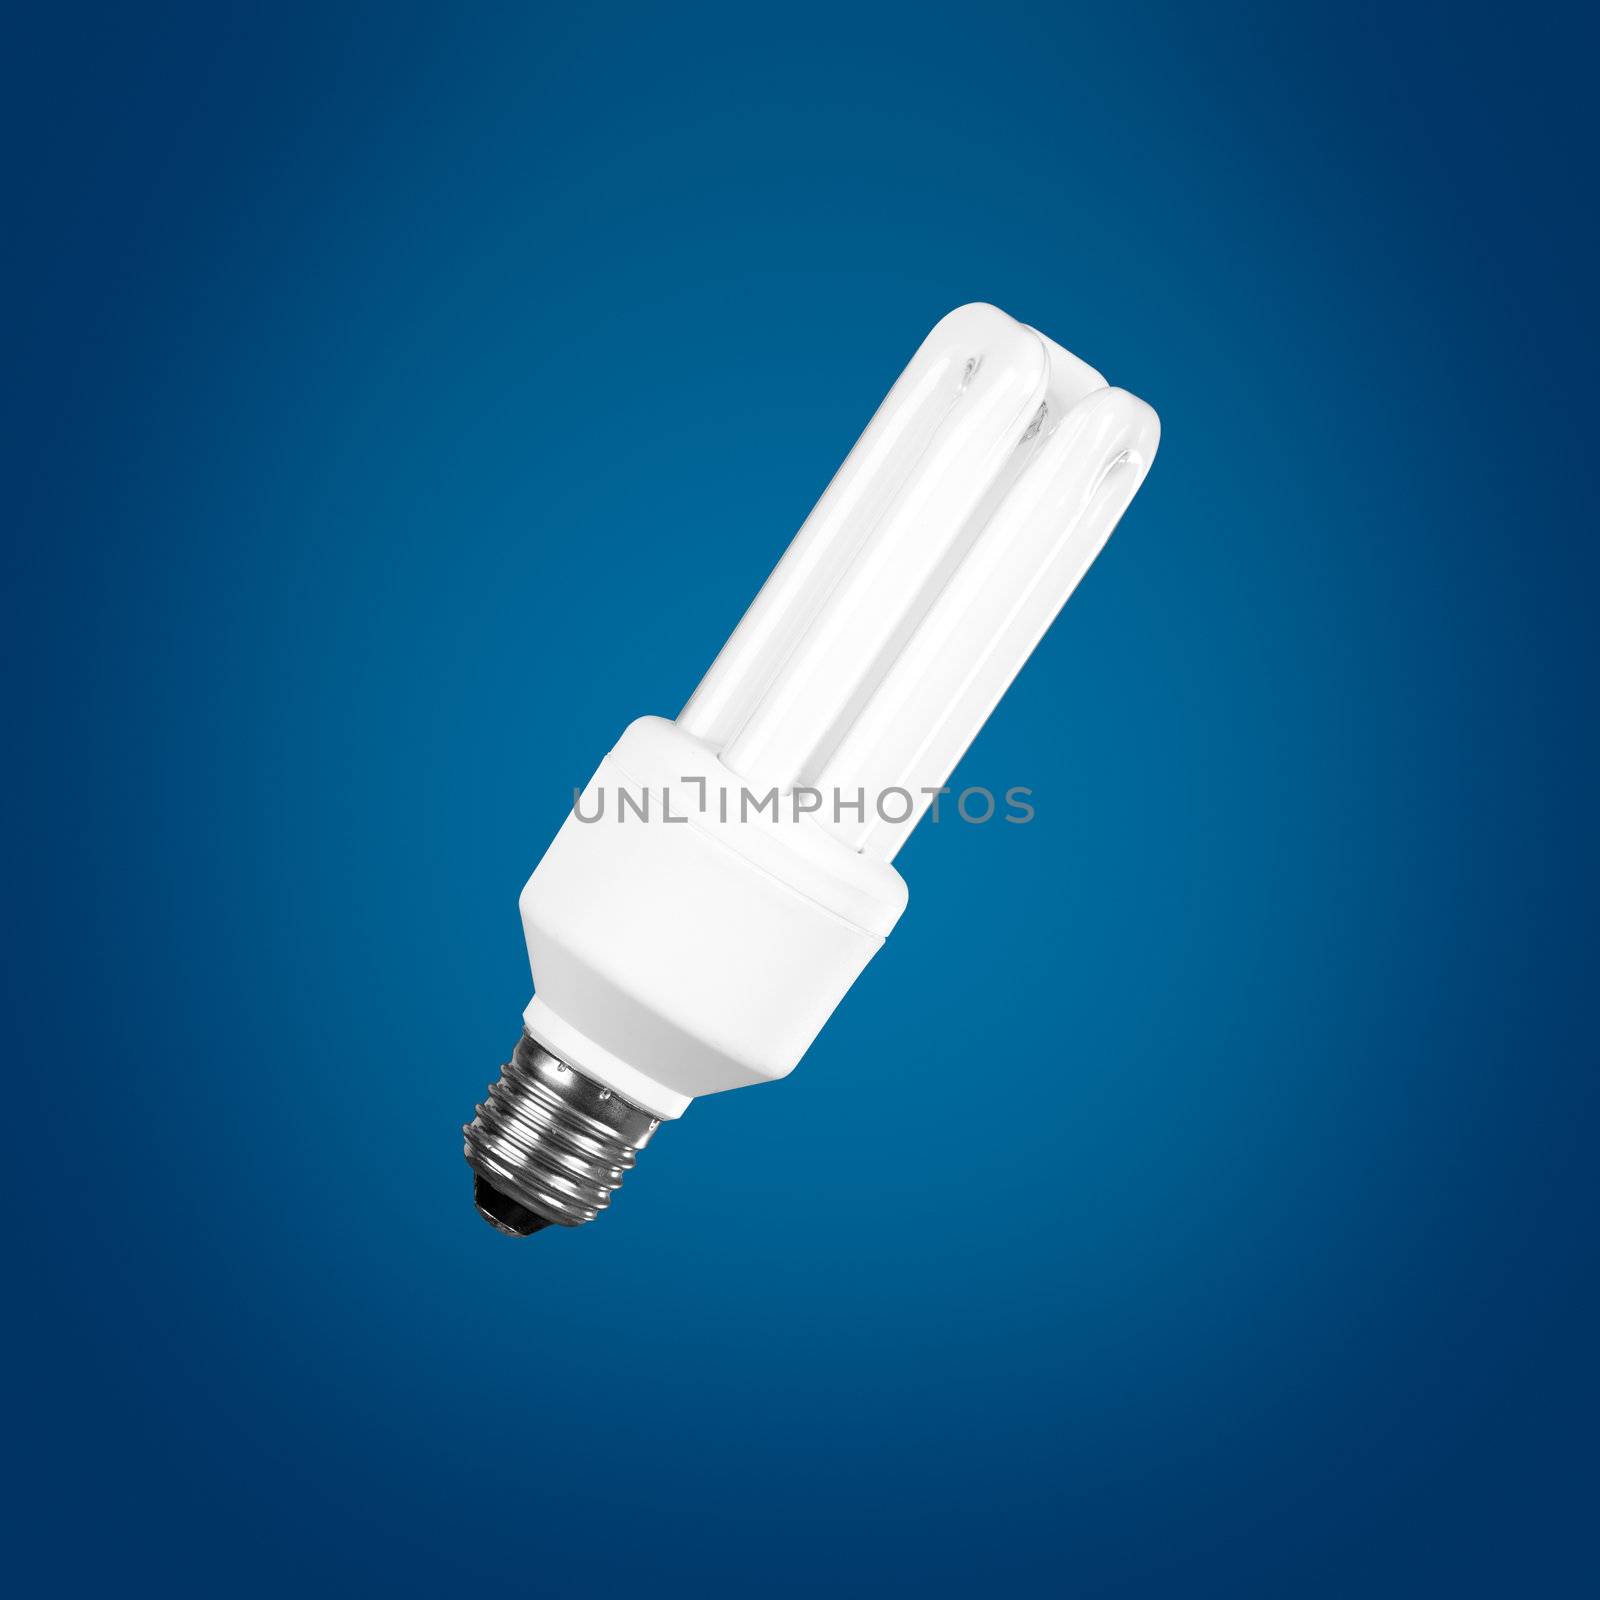 Fluorescent Light Bulb on a blue background, energy concept